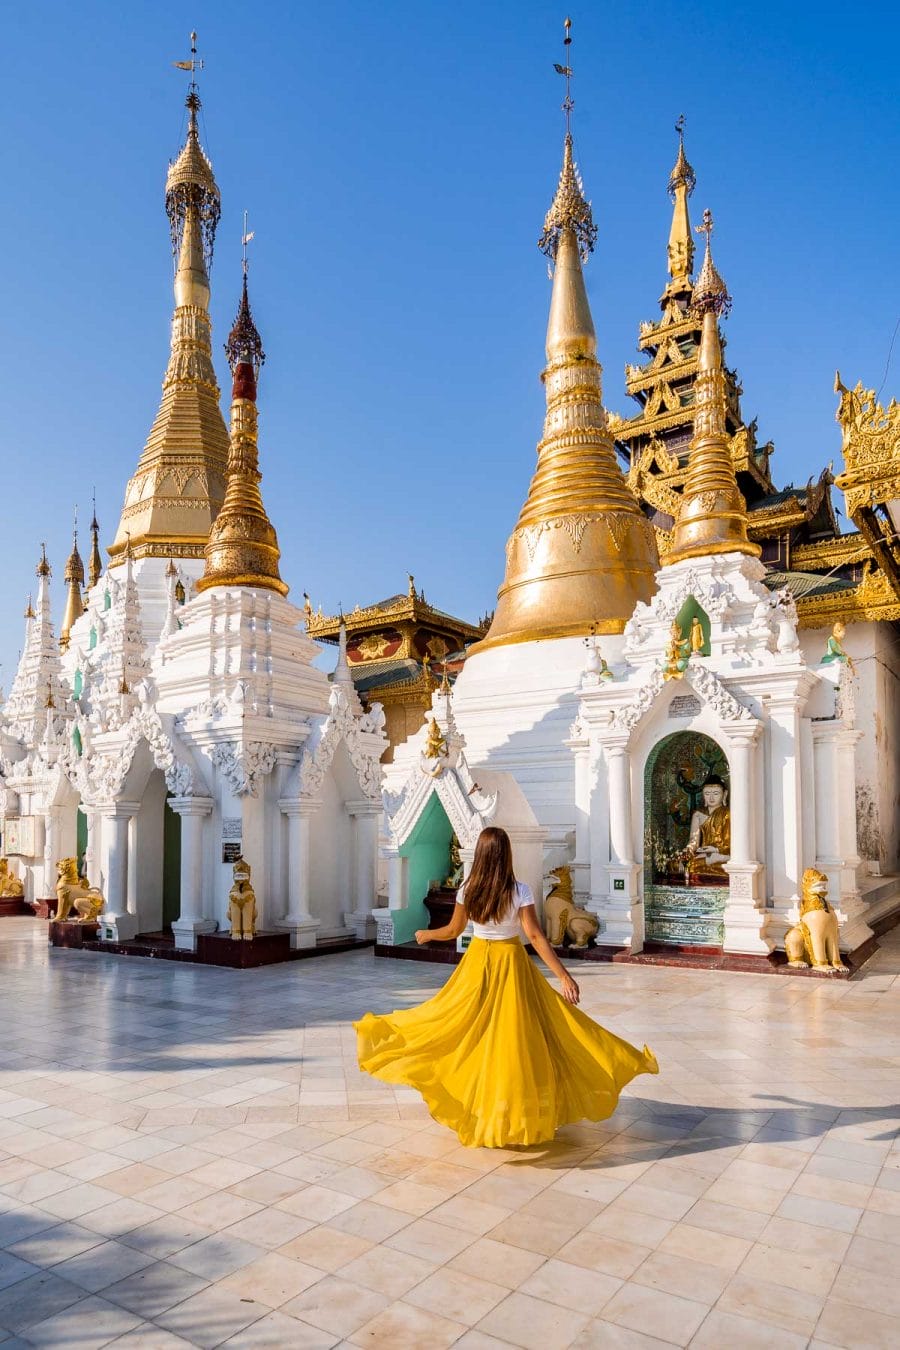 Girl in yellow skirt in front of Shwedagon Pagoda in Yangon, Myanmar